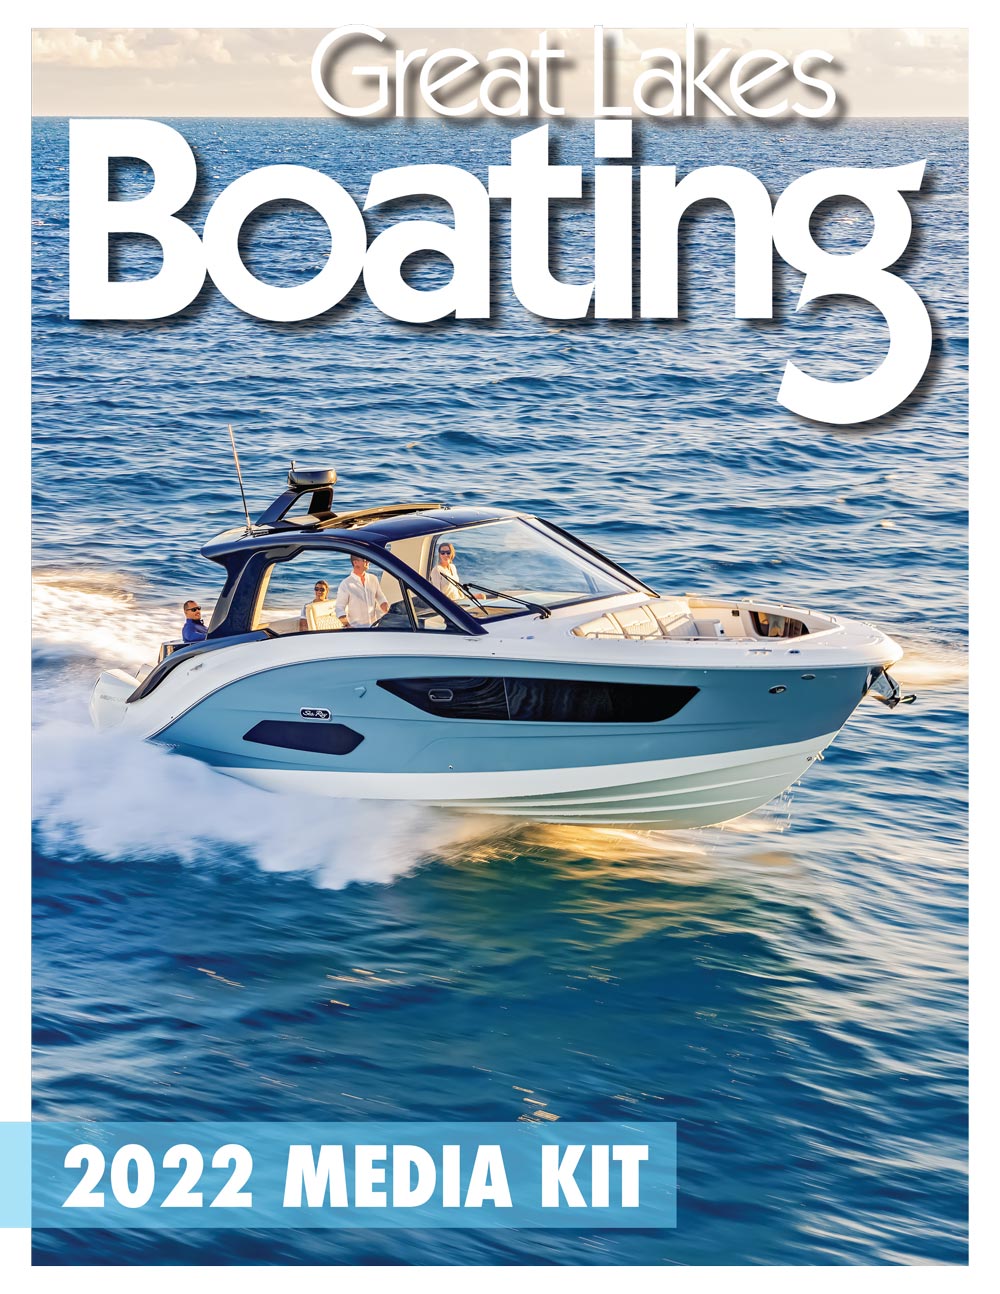 Great Lakes Boating media kit cover